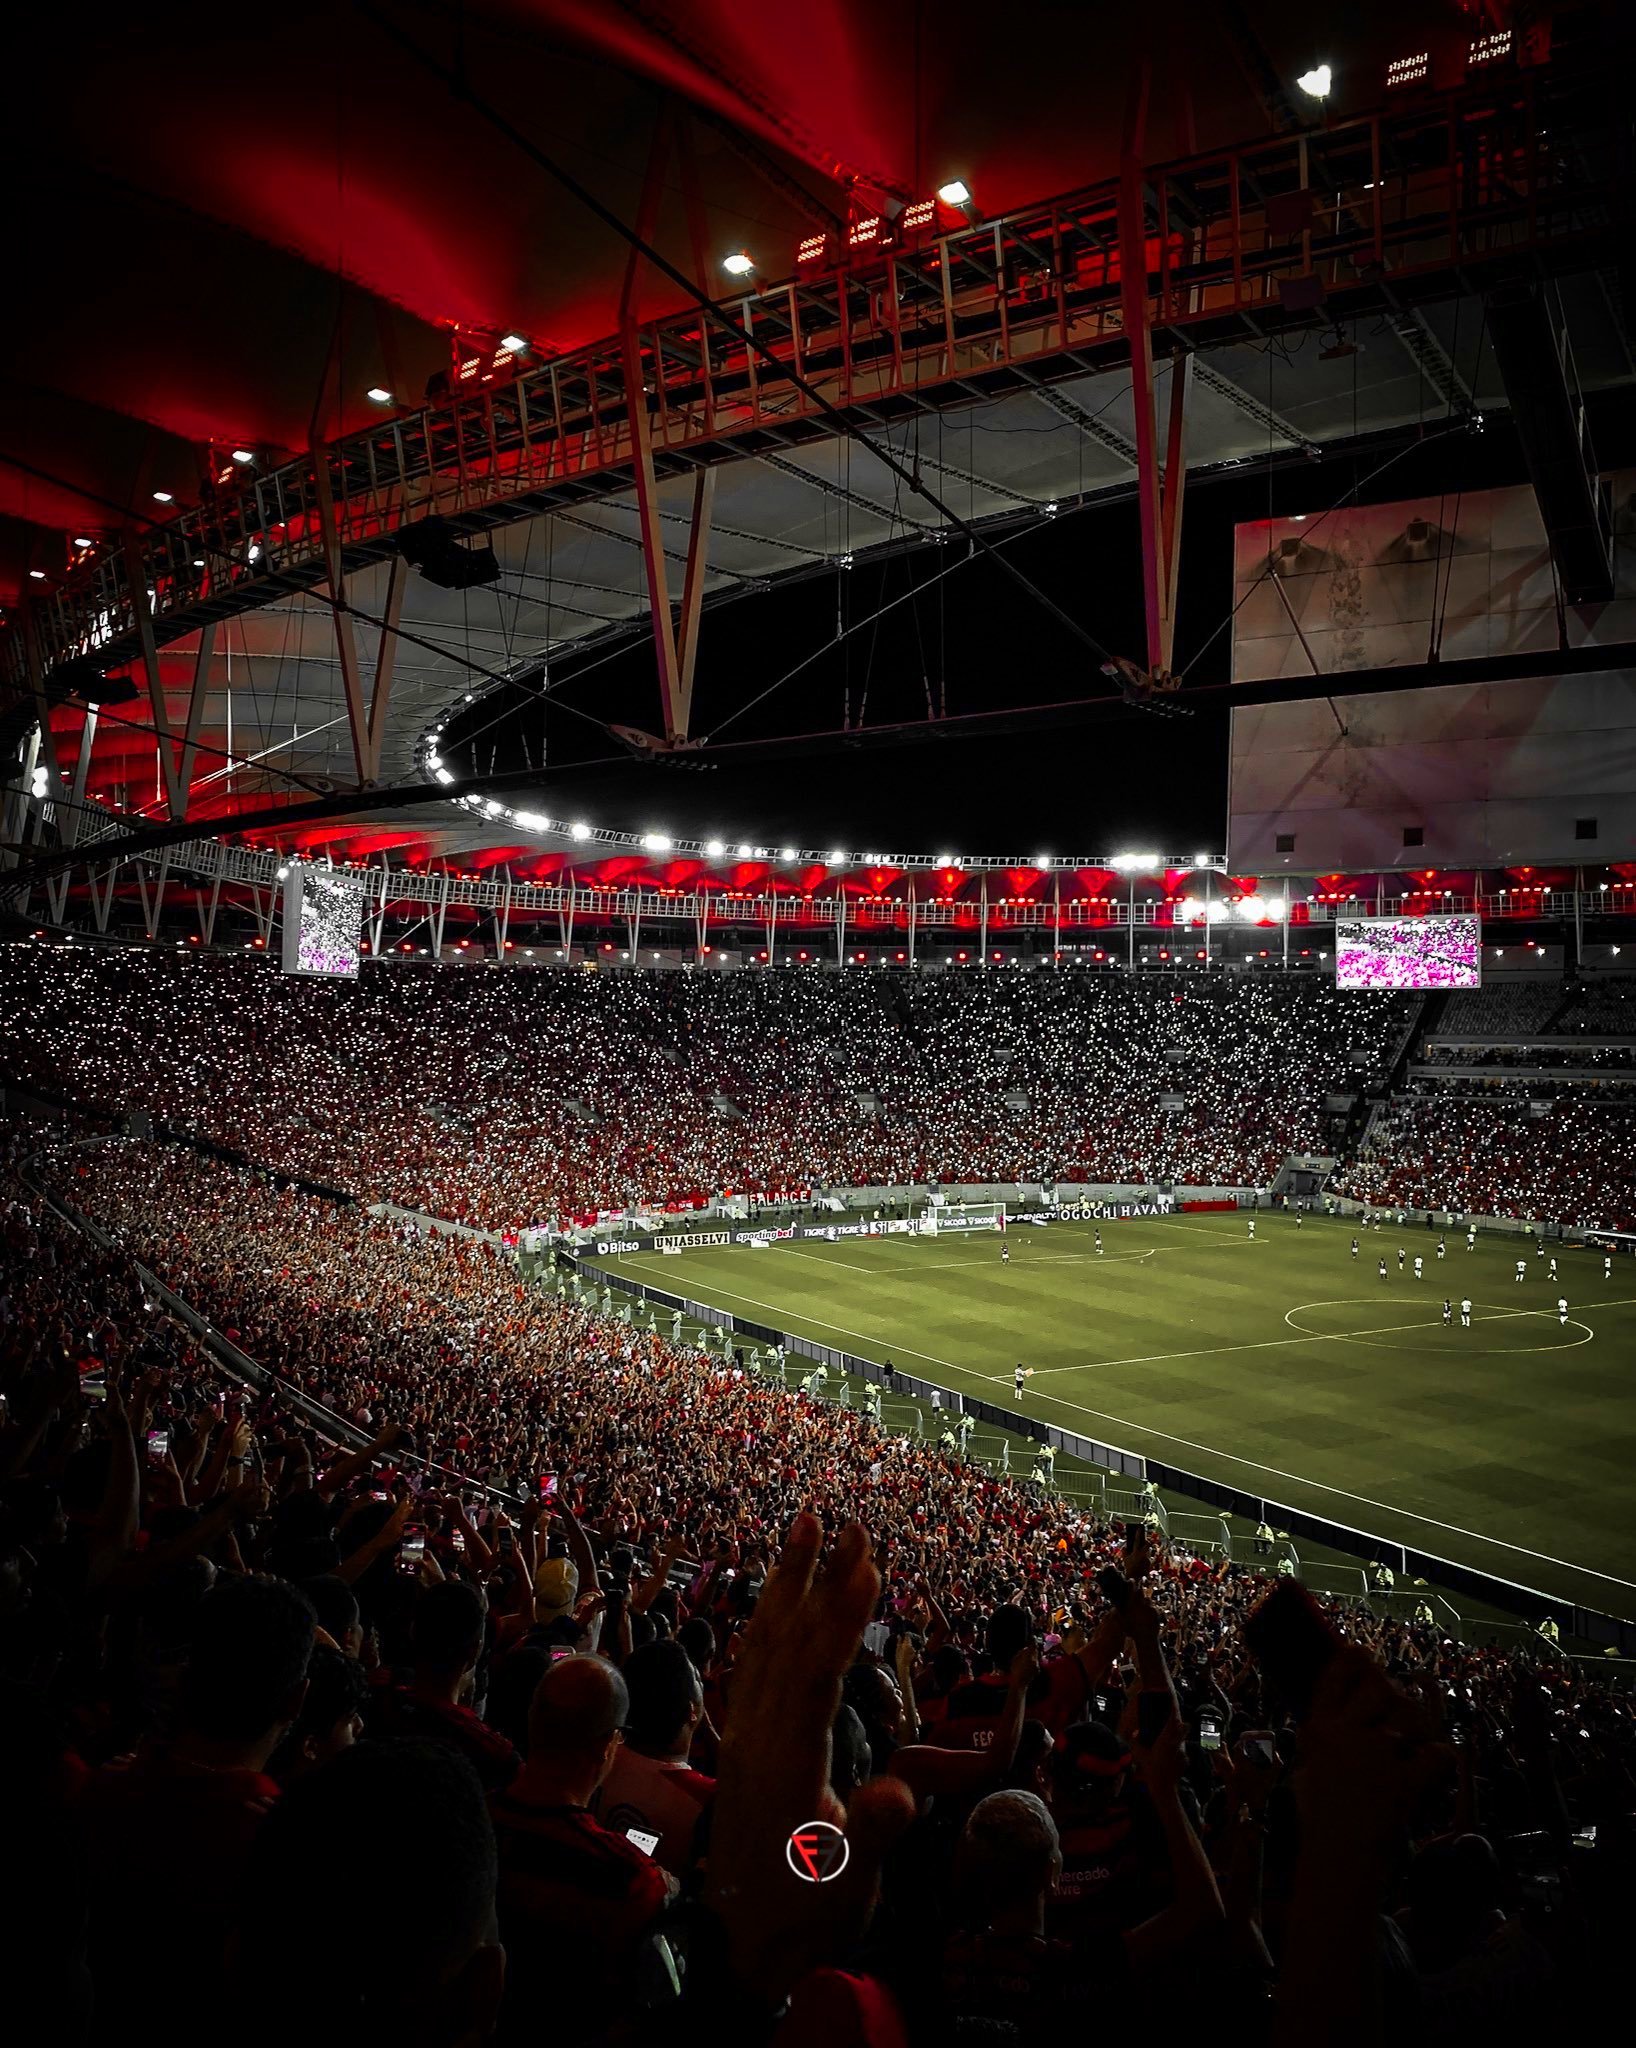 Papel De Parede Celular Flamengo - 10 Super Wallpapers